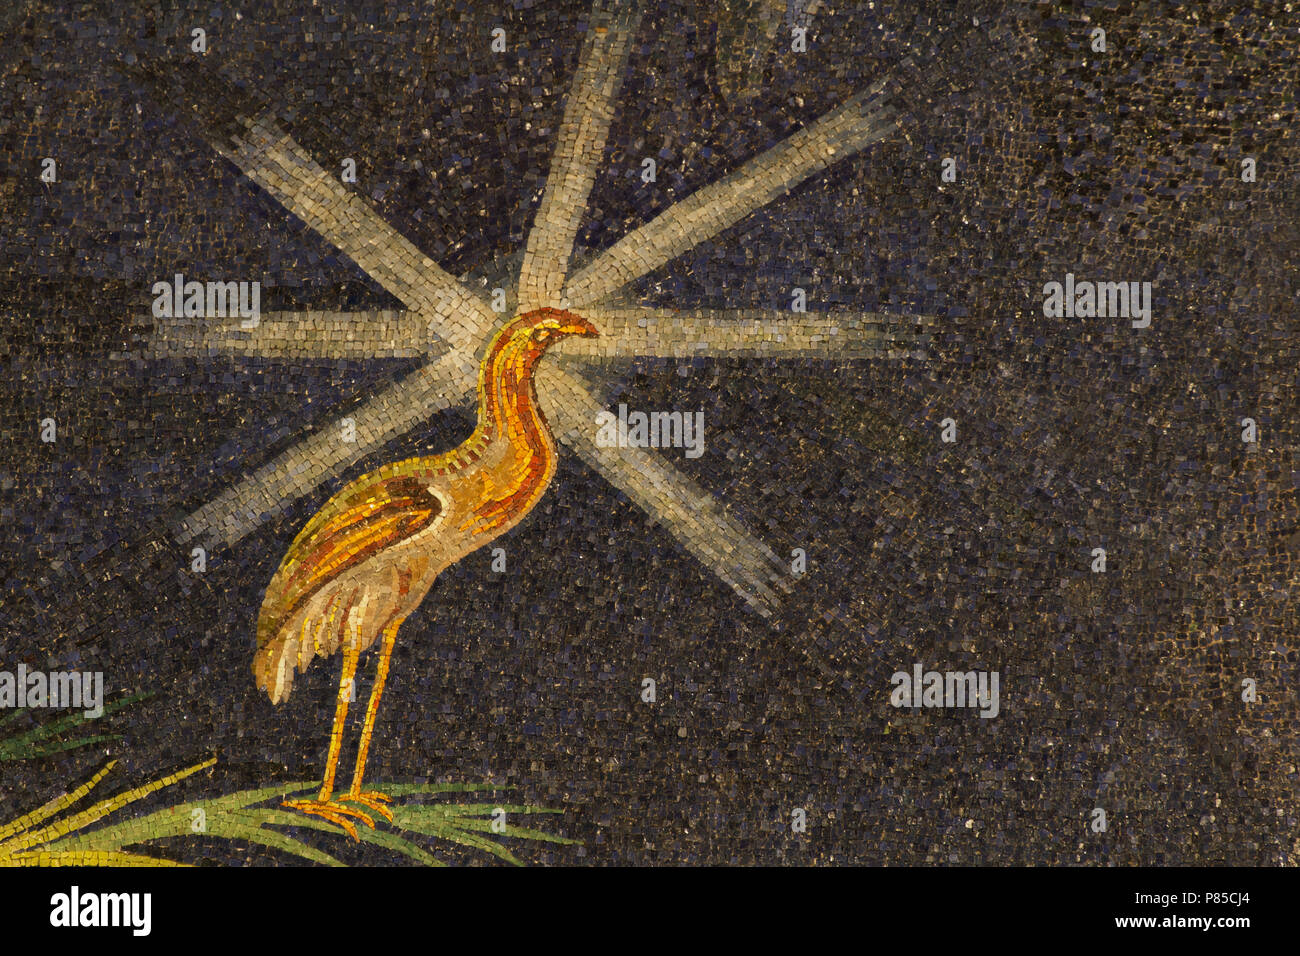 Pfau - Detail des 6. Jahrhunderts Apsis Mosaik (530 AC) - Meisterwerk der frühen christlichen Kunst - Basilika Santi Cosma e Damiano - Rom Stockfoto